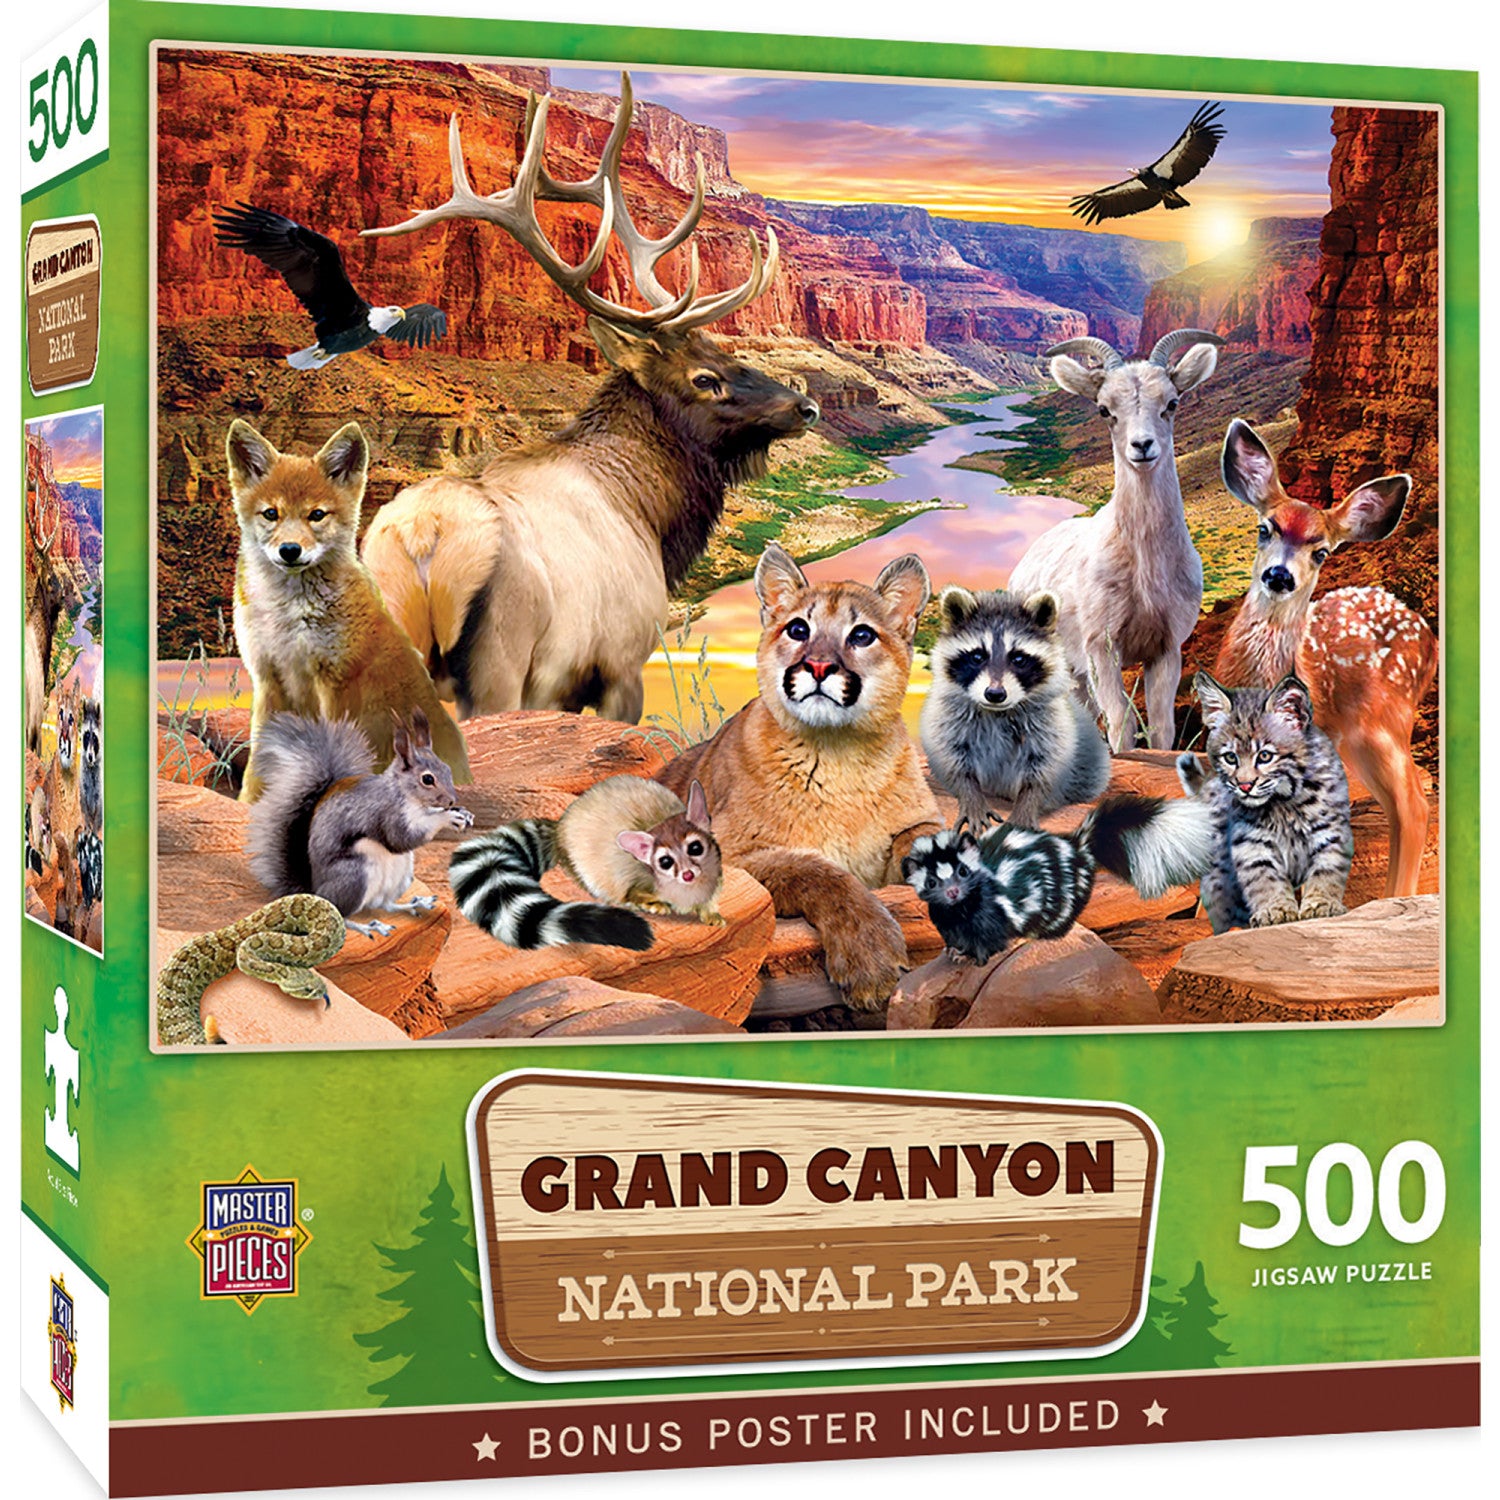 National Parks - Grand Canyon National Park 500 Piece Puzzle